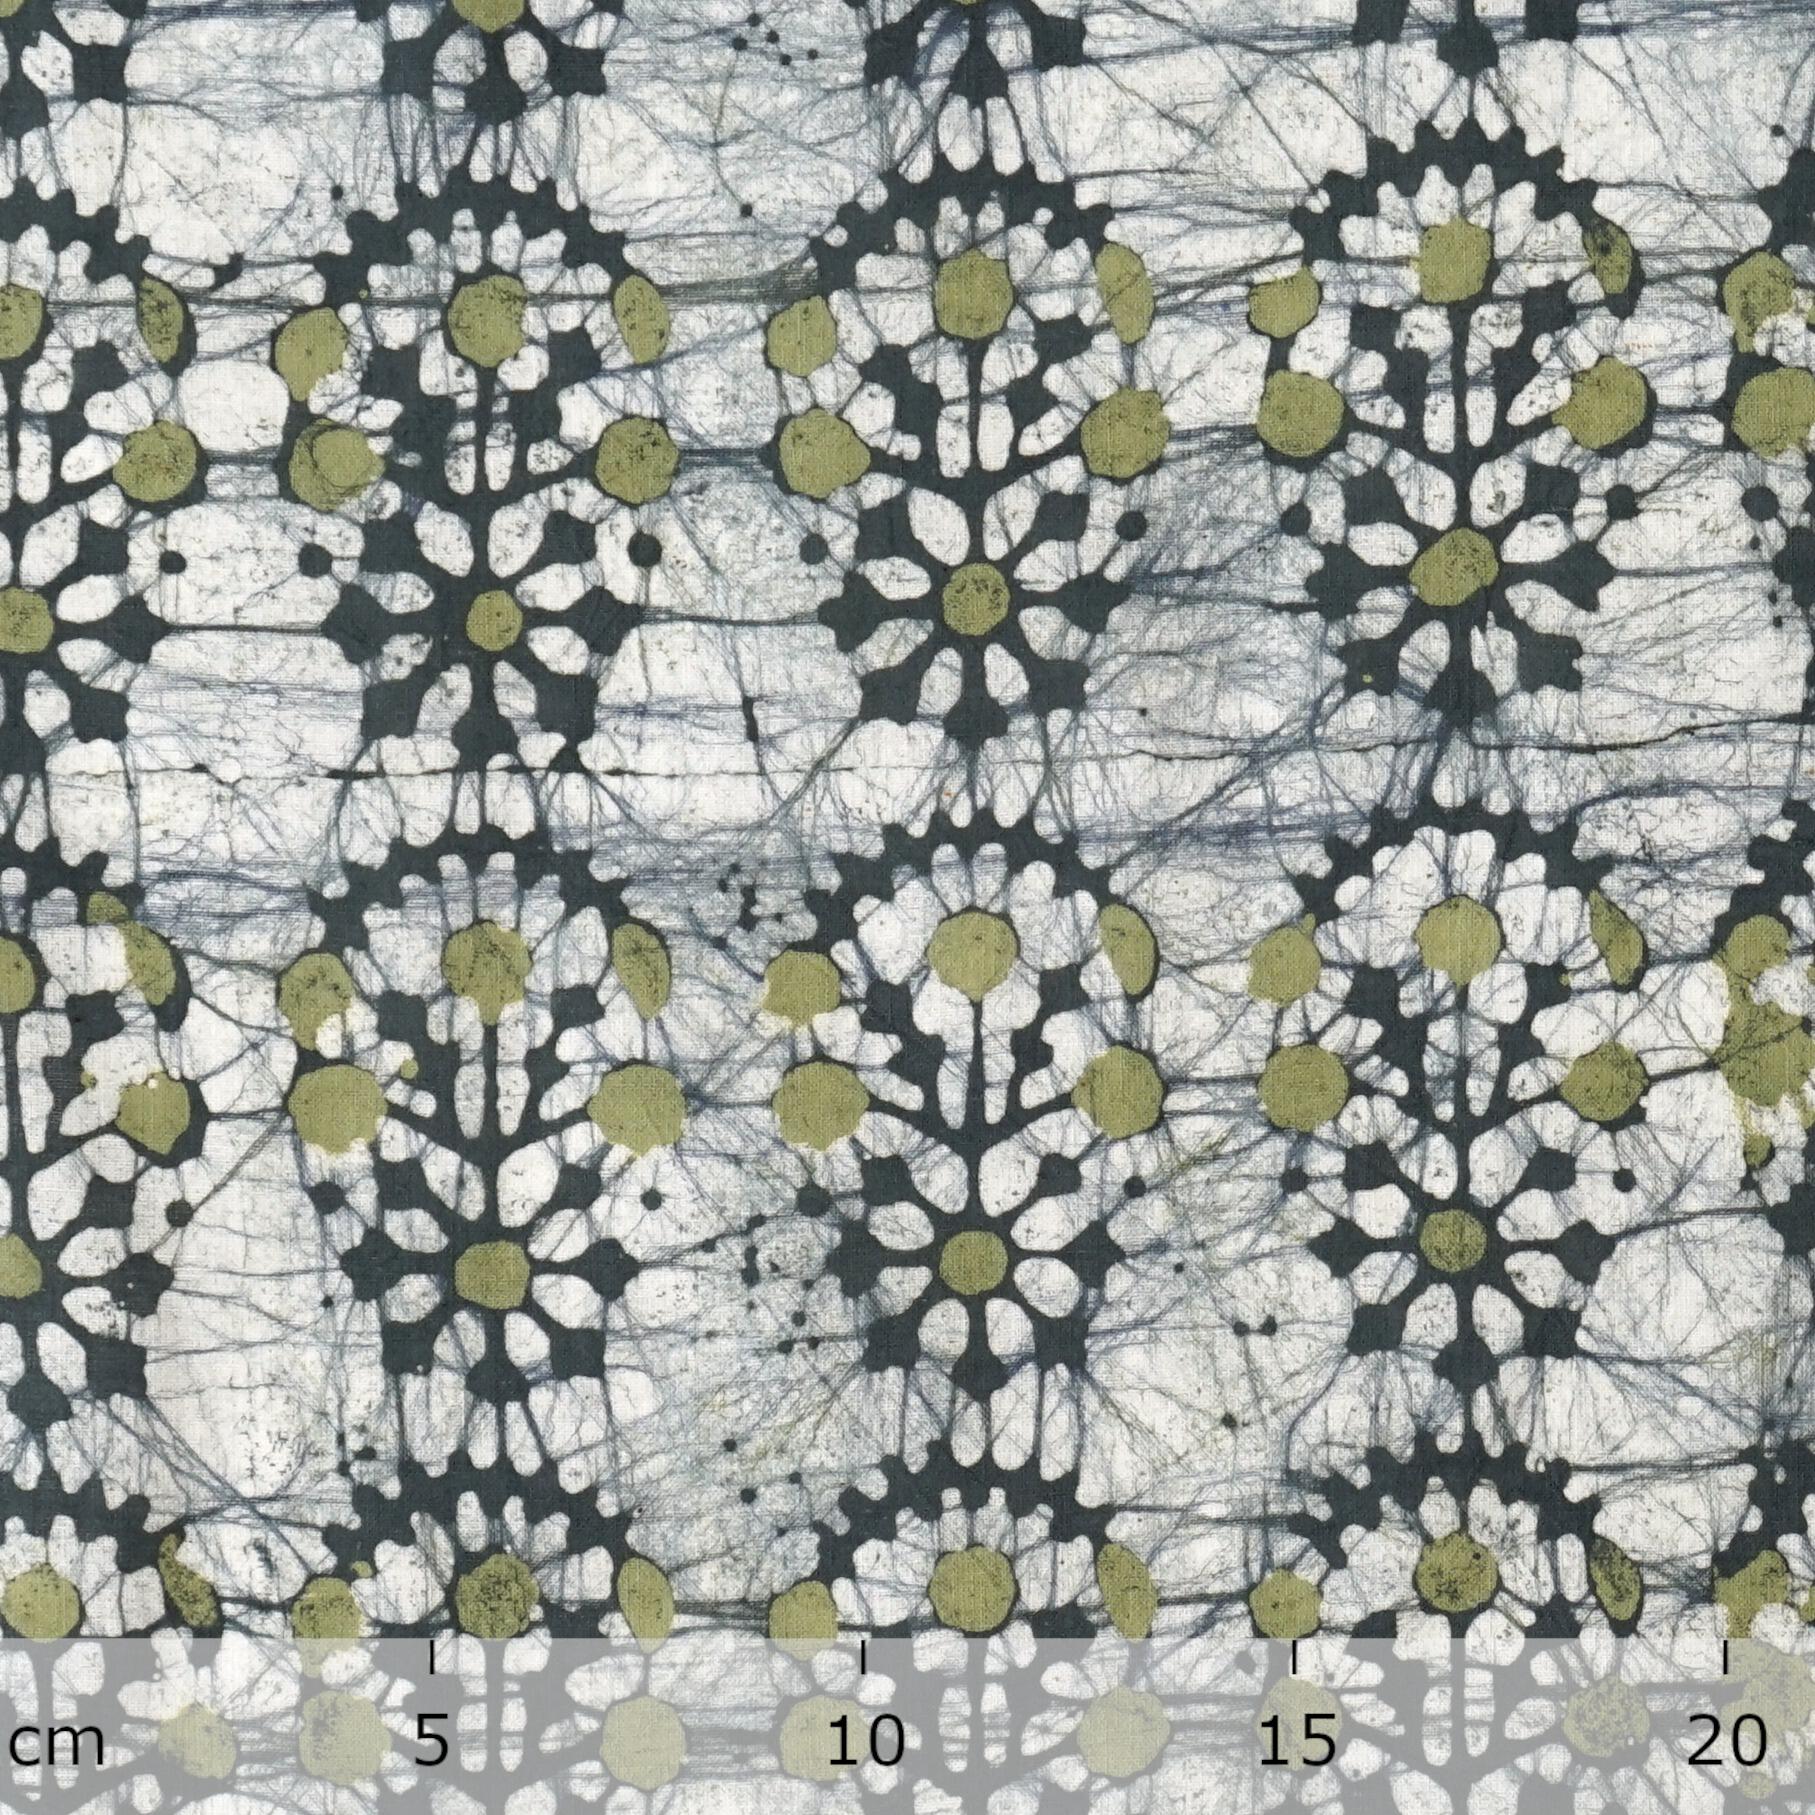 100% Block-Printed Batik Cotton Fabric From India - Seahorse Motif - Ruler